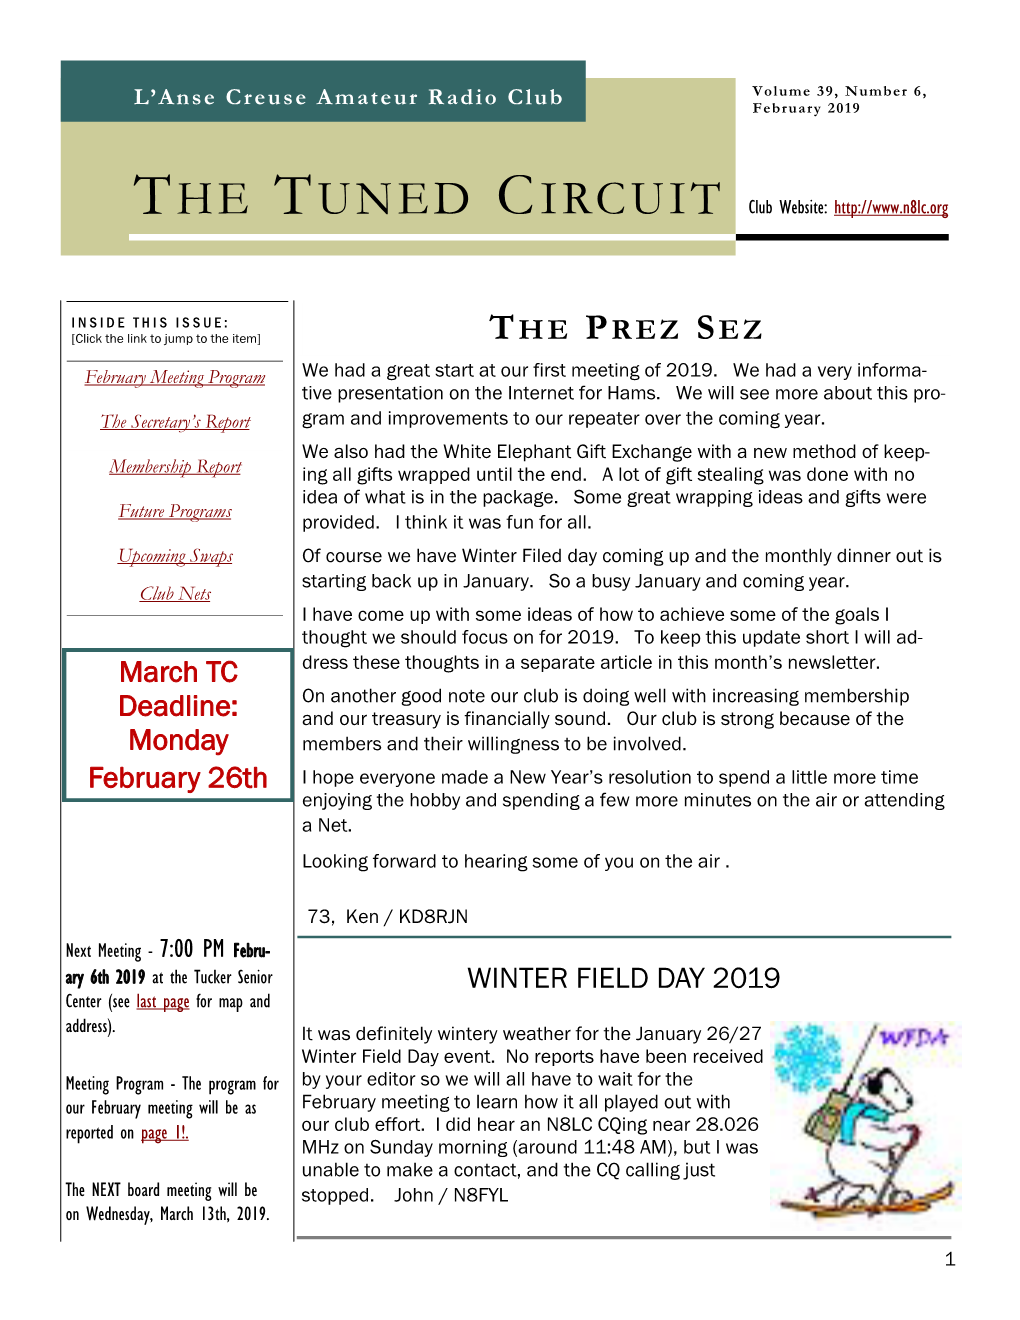 LCARC Tuned Circuit January 2019